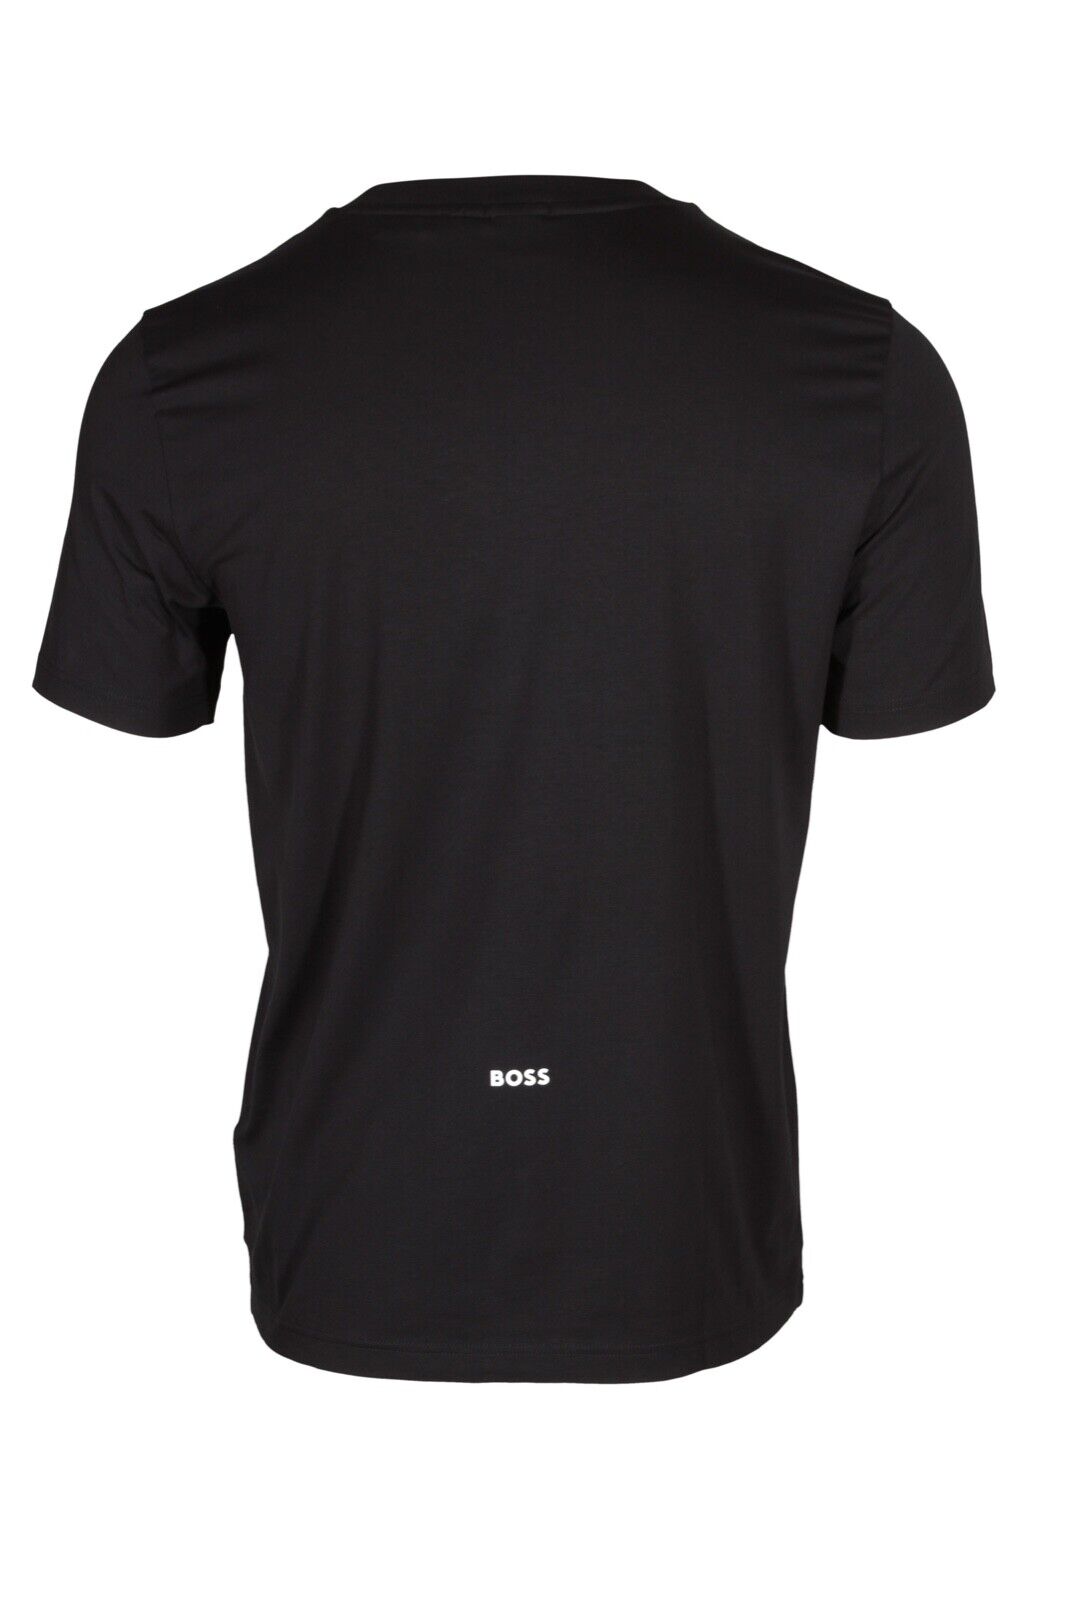 HUGO BOSS Tee 7 Men’s Stretch Regular Fit T-Shirt in Black 50472863 001